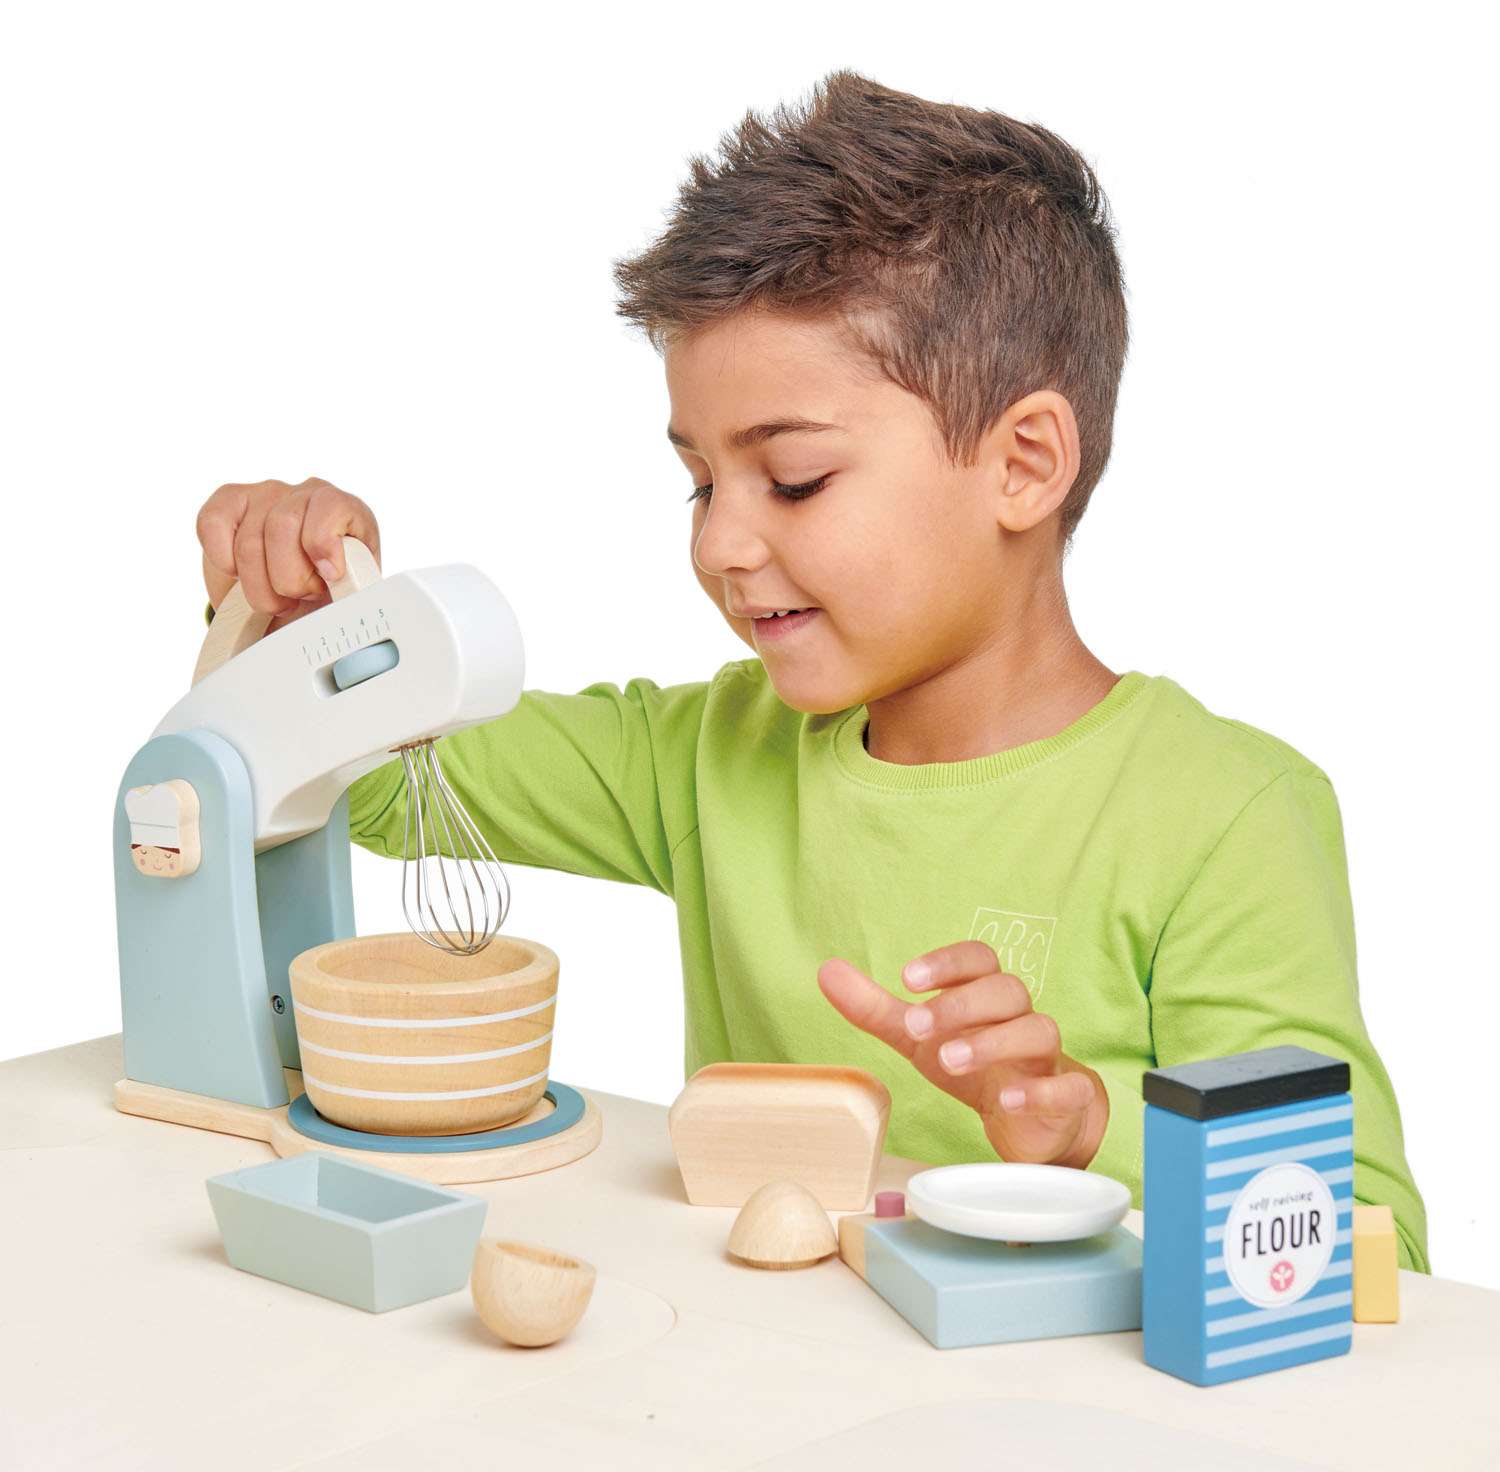 Tender Leaf Toys ของเล่นไม้ ของเล่นบทบาทสมมติ ชุดทำเบเกอรี่ที่บ้าน Home Baking Set